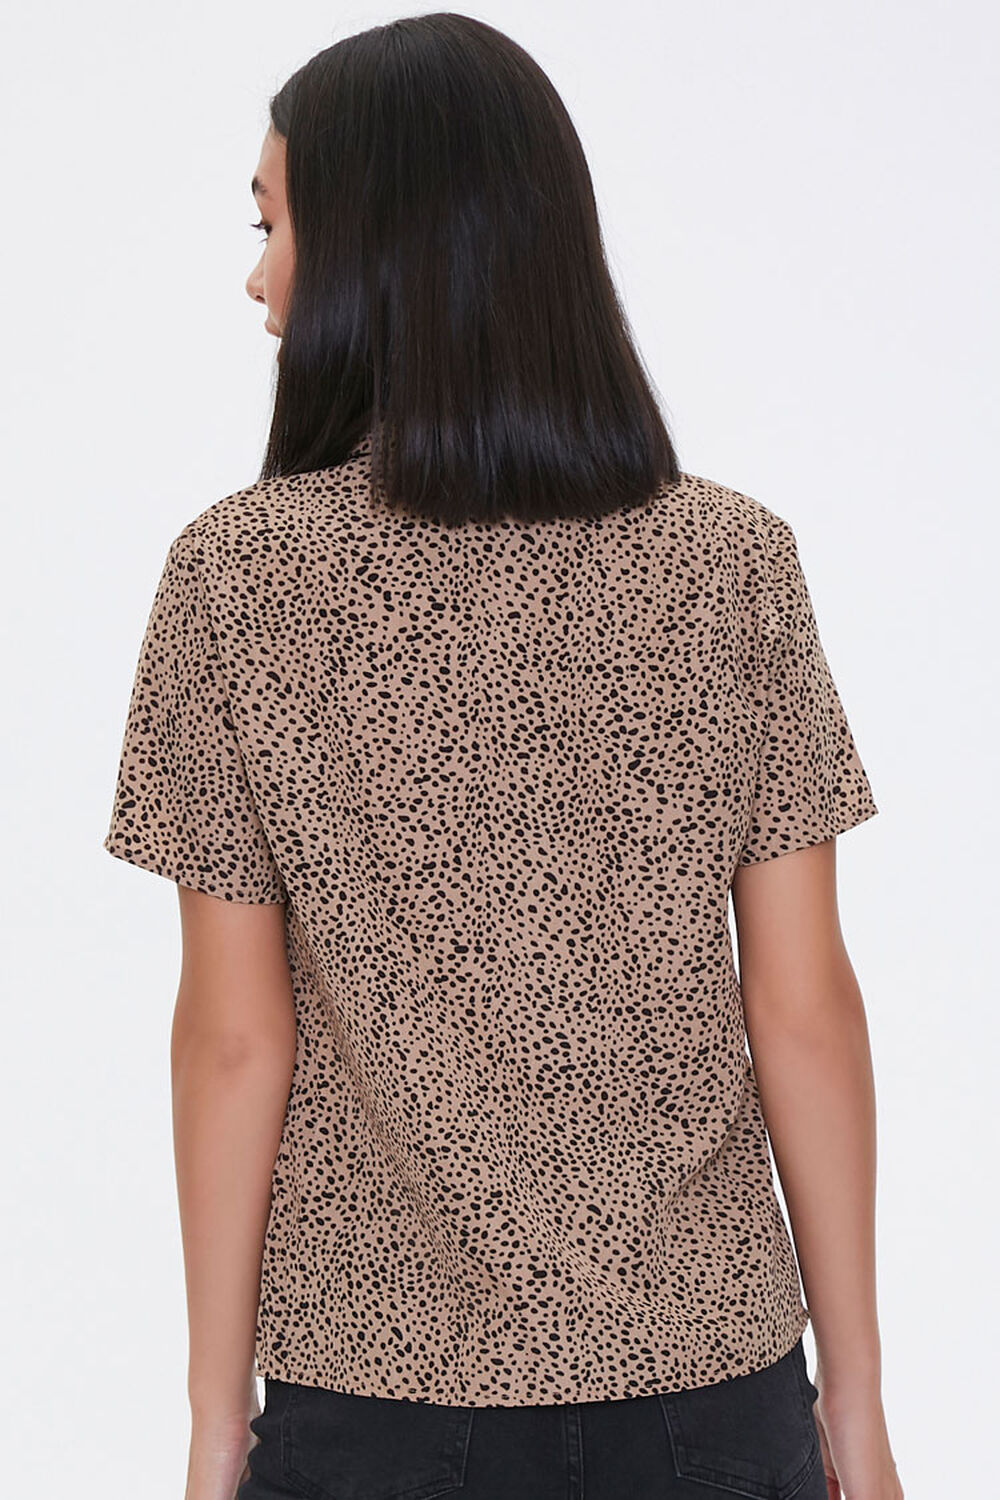 TAUPE/BLACK Cheetah Print Shirt, image 3